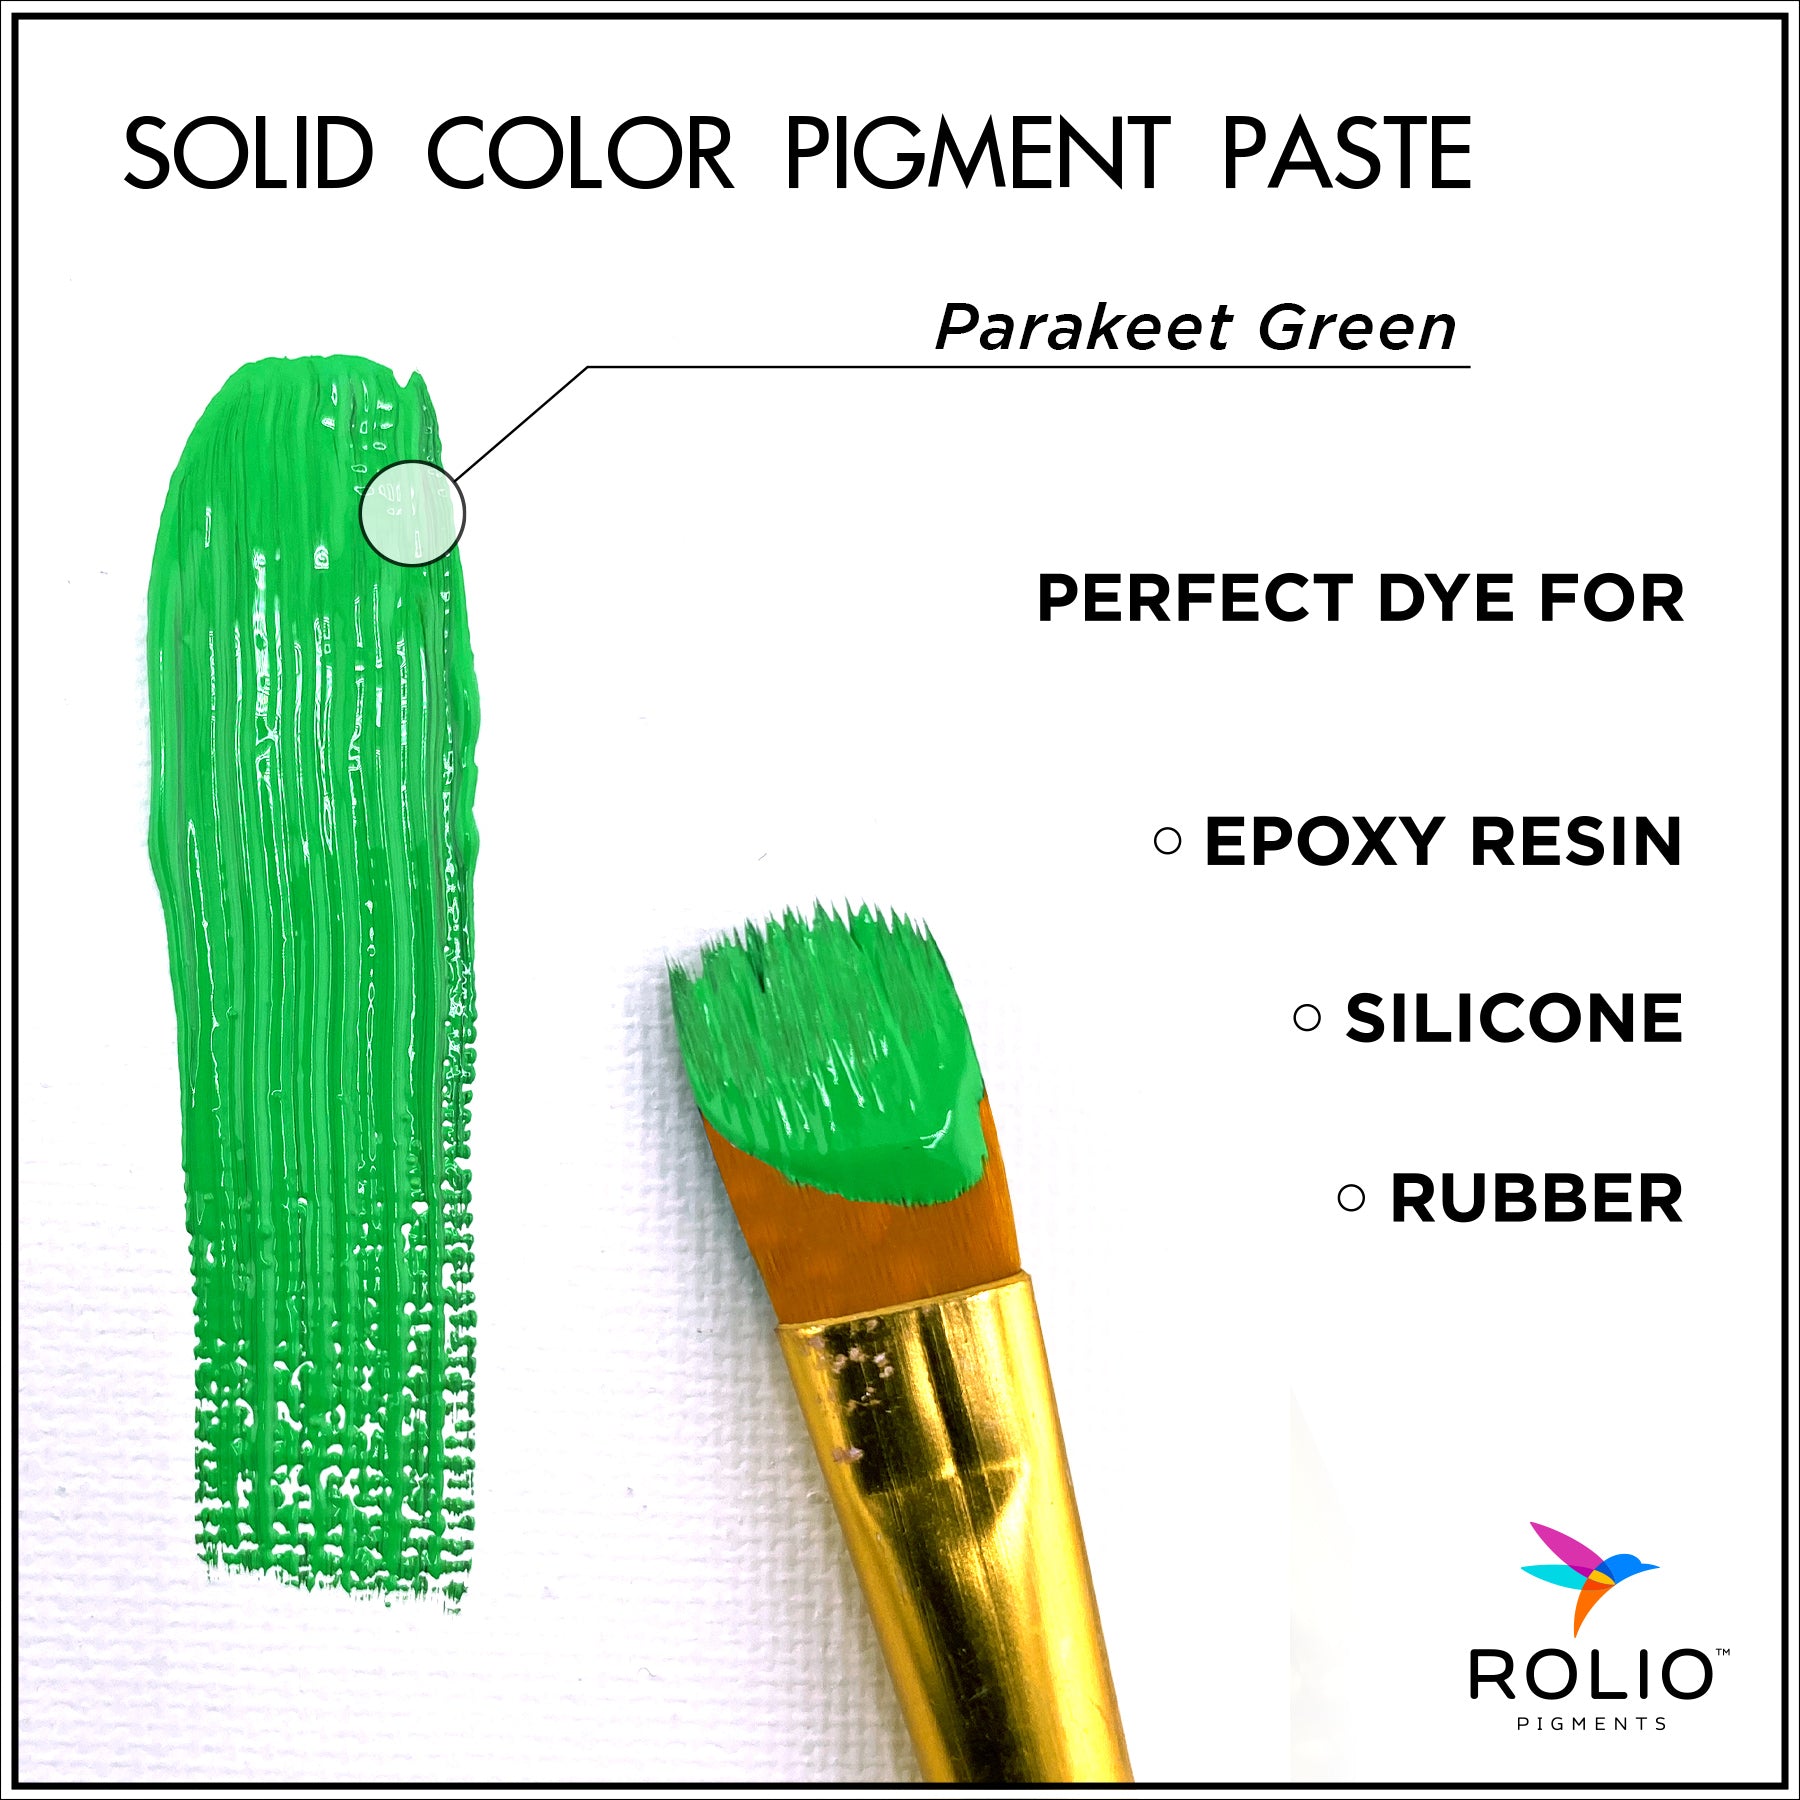 03-Rolio-Parakeet-Green-Resin-Pigment-Paste-Description.jpg